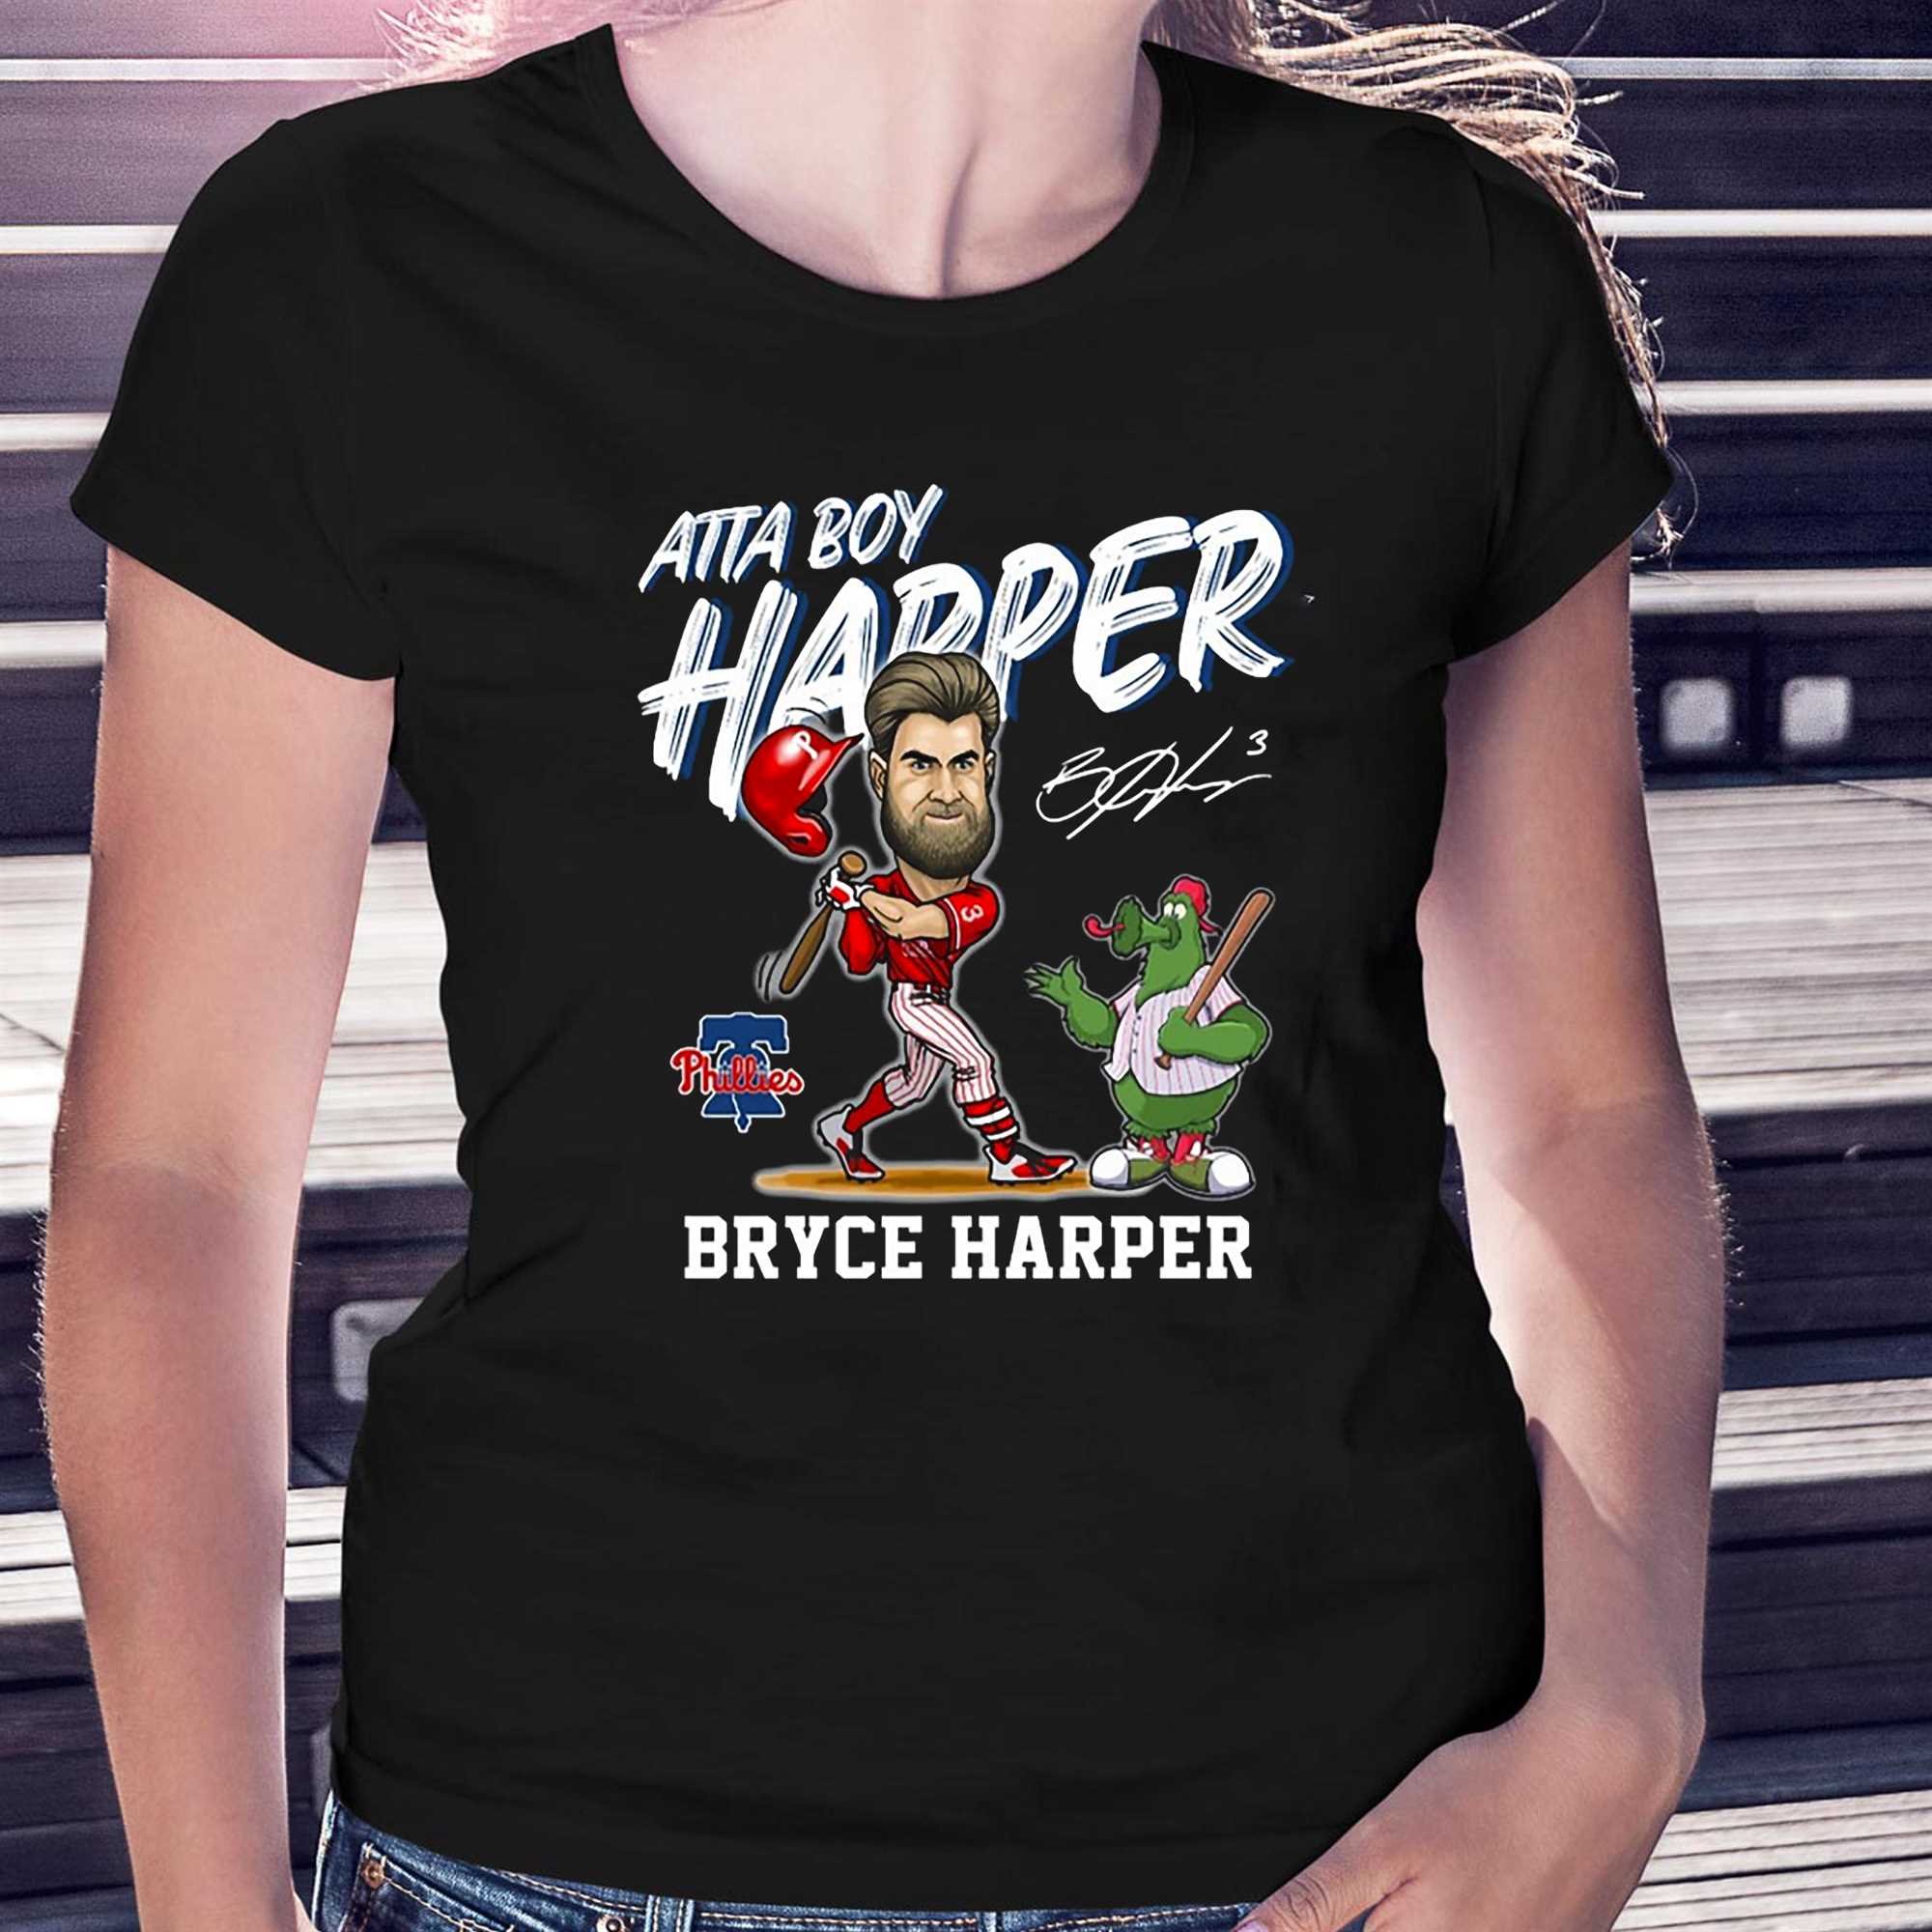 Design Philadelphia phillies atta boy harper bryce harper t shirt